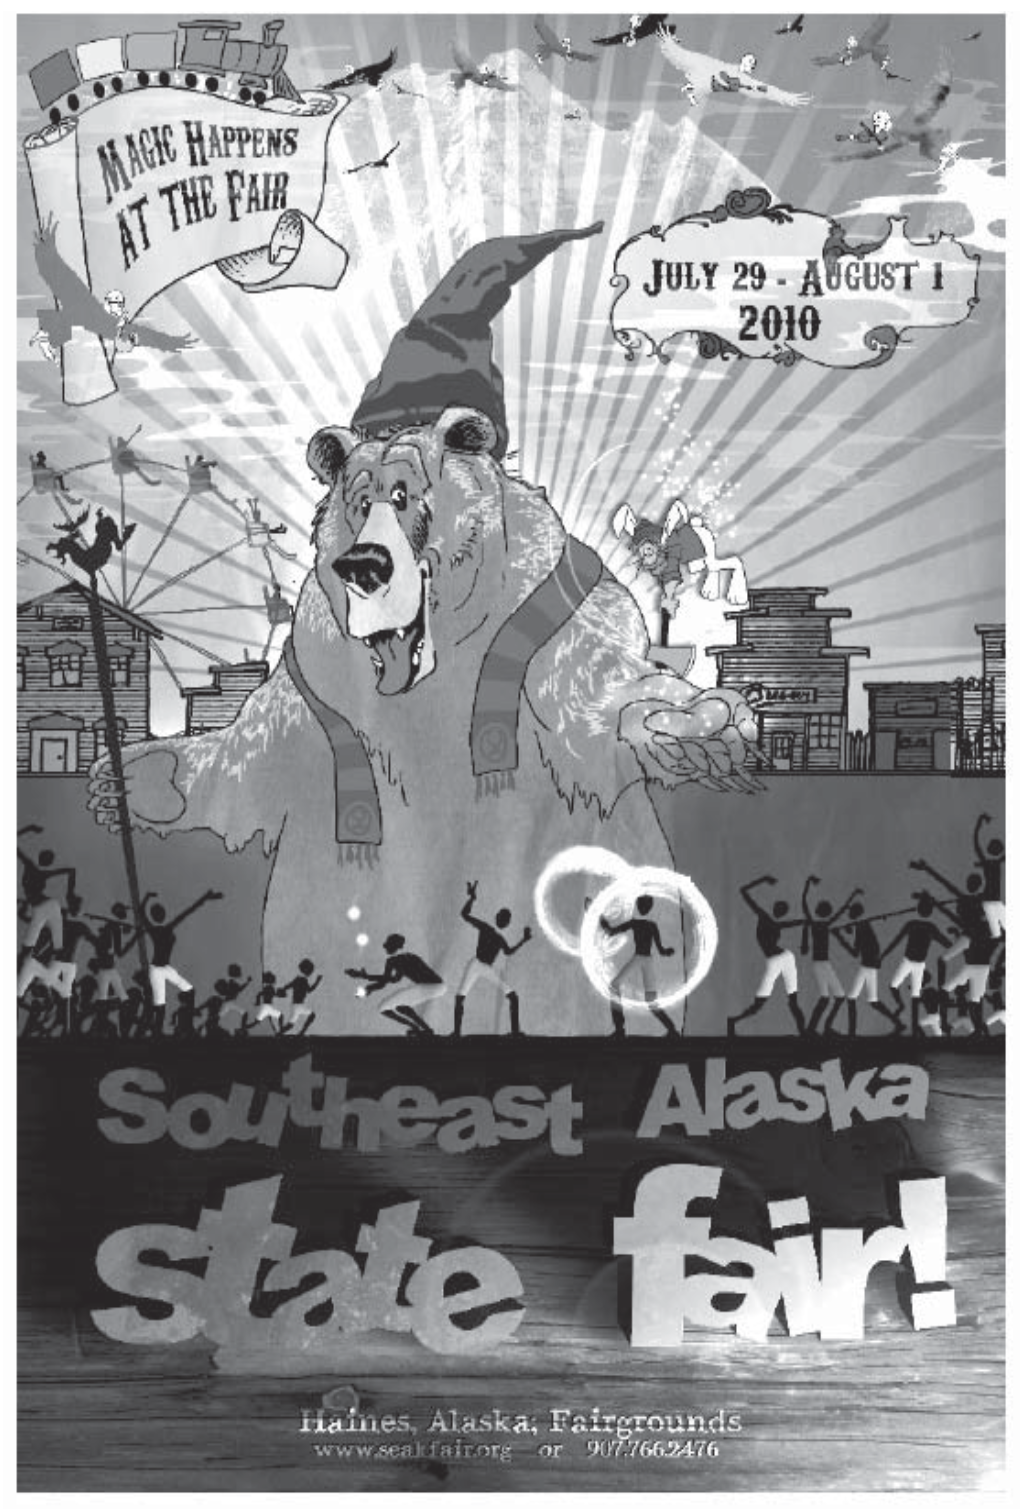 The Southeast Alaska State Fair! Every Year We Look Forward to Our Southeast Alaska State Fair